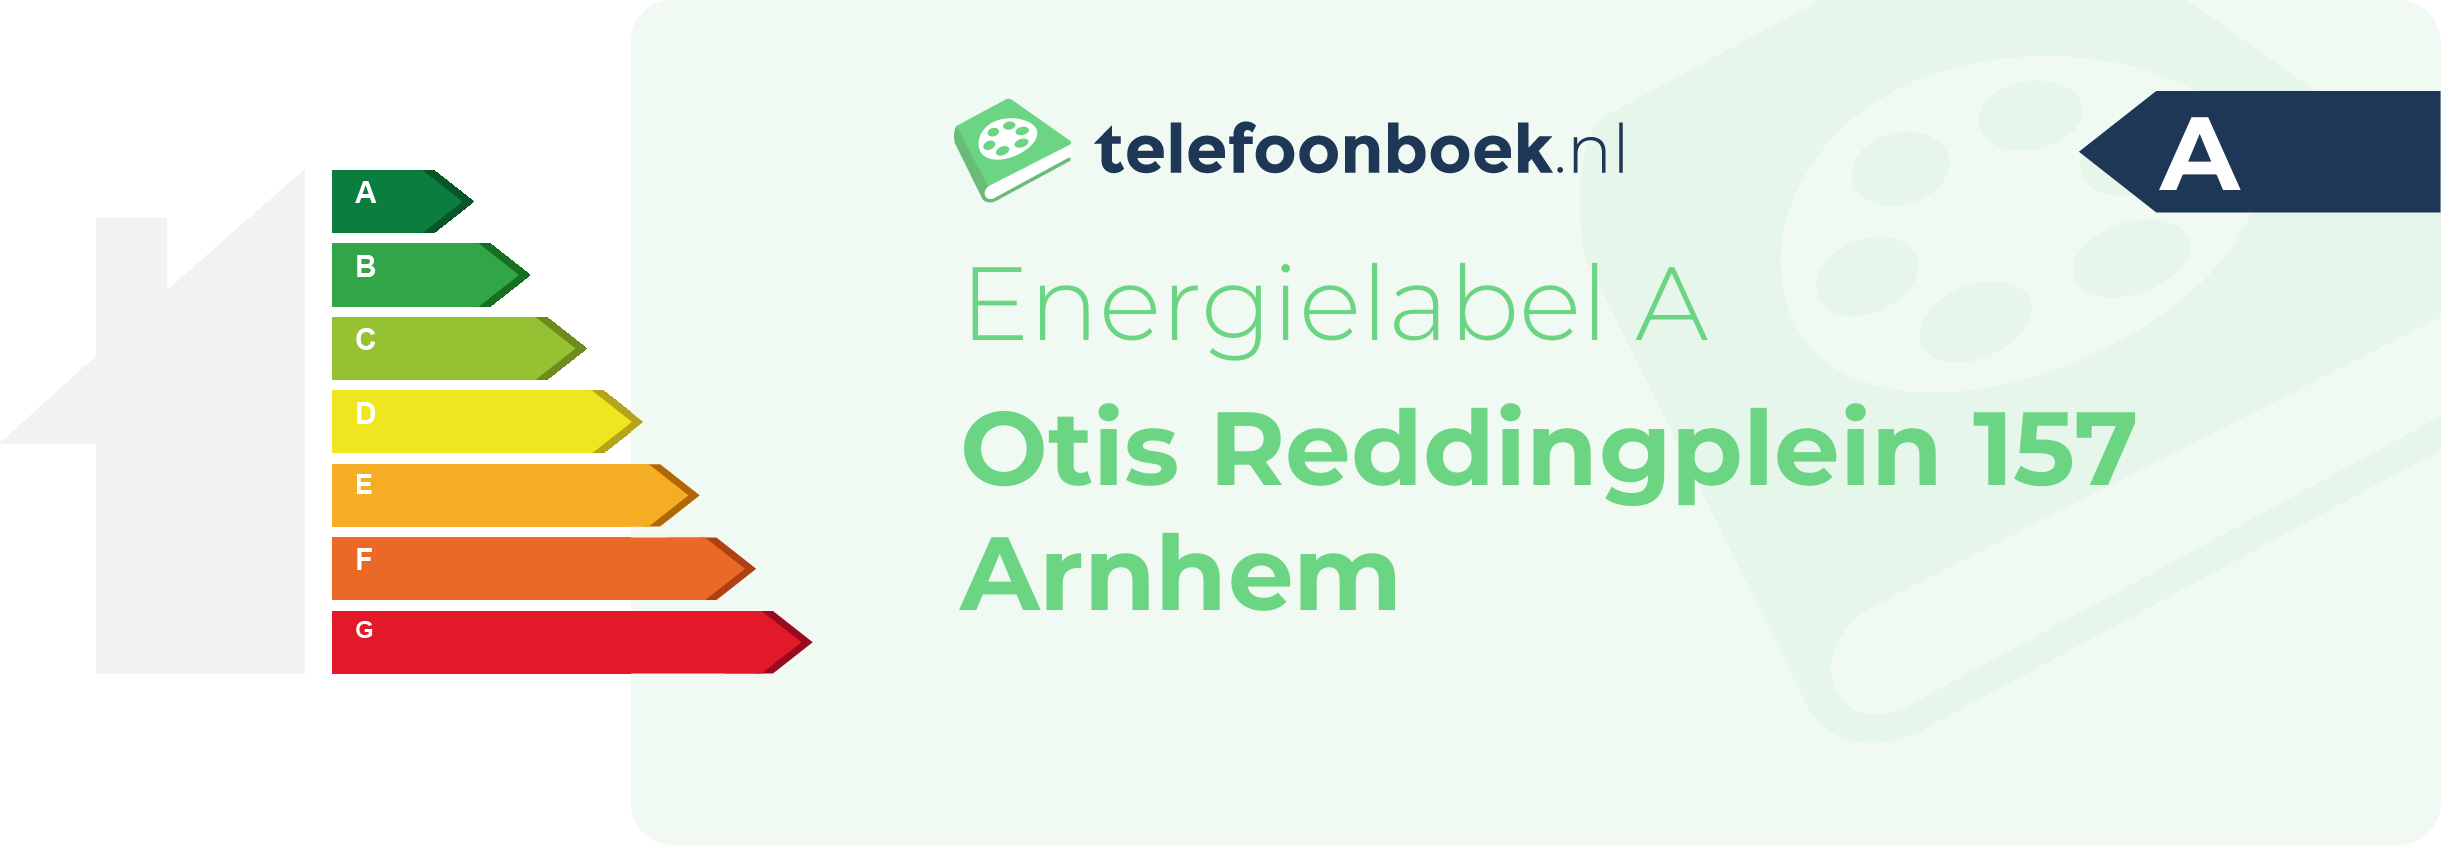 Energielabel Otis Reddingplein 157 Arnhem